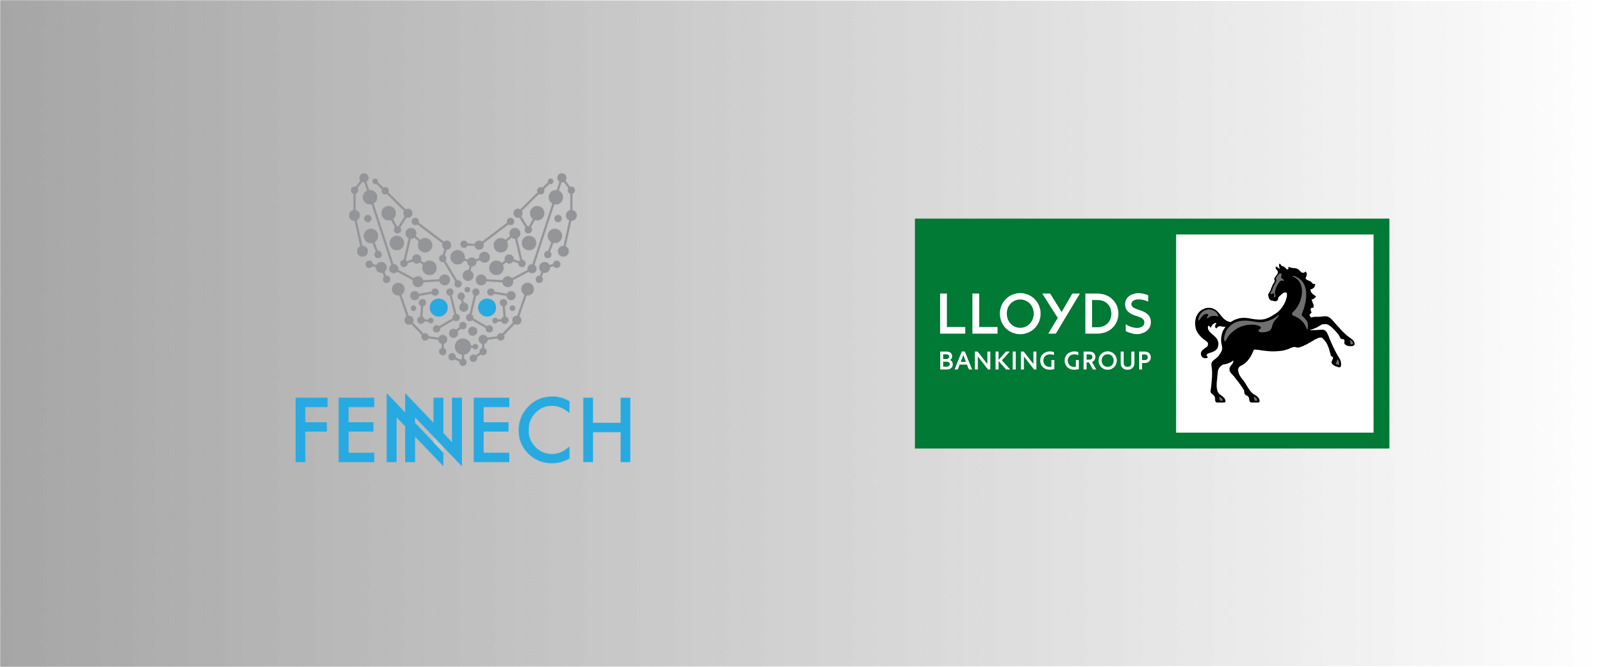 Fennech - Lloyds Banking Group